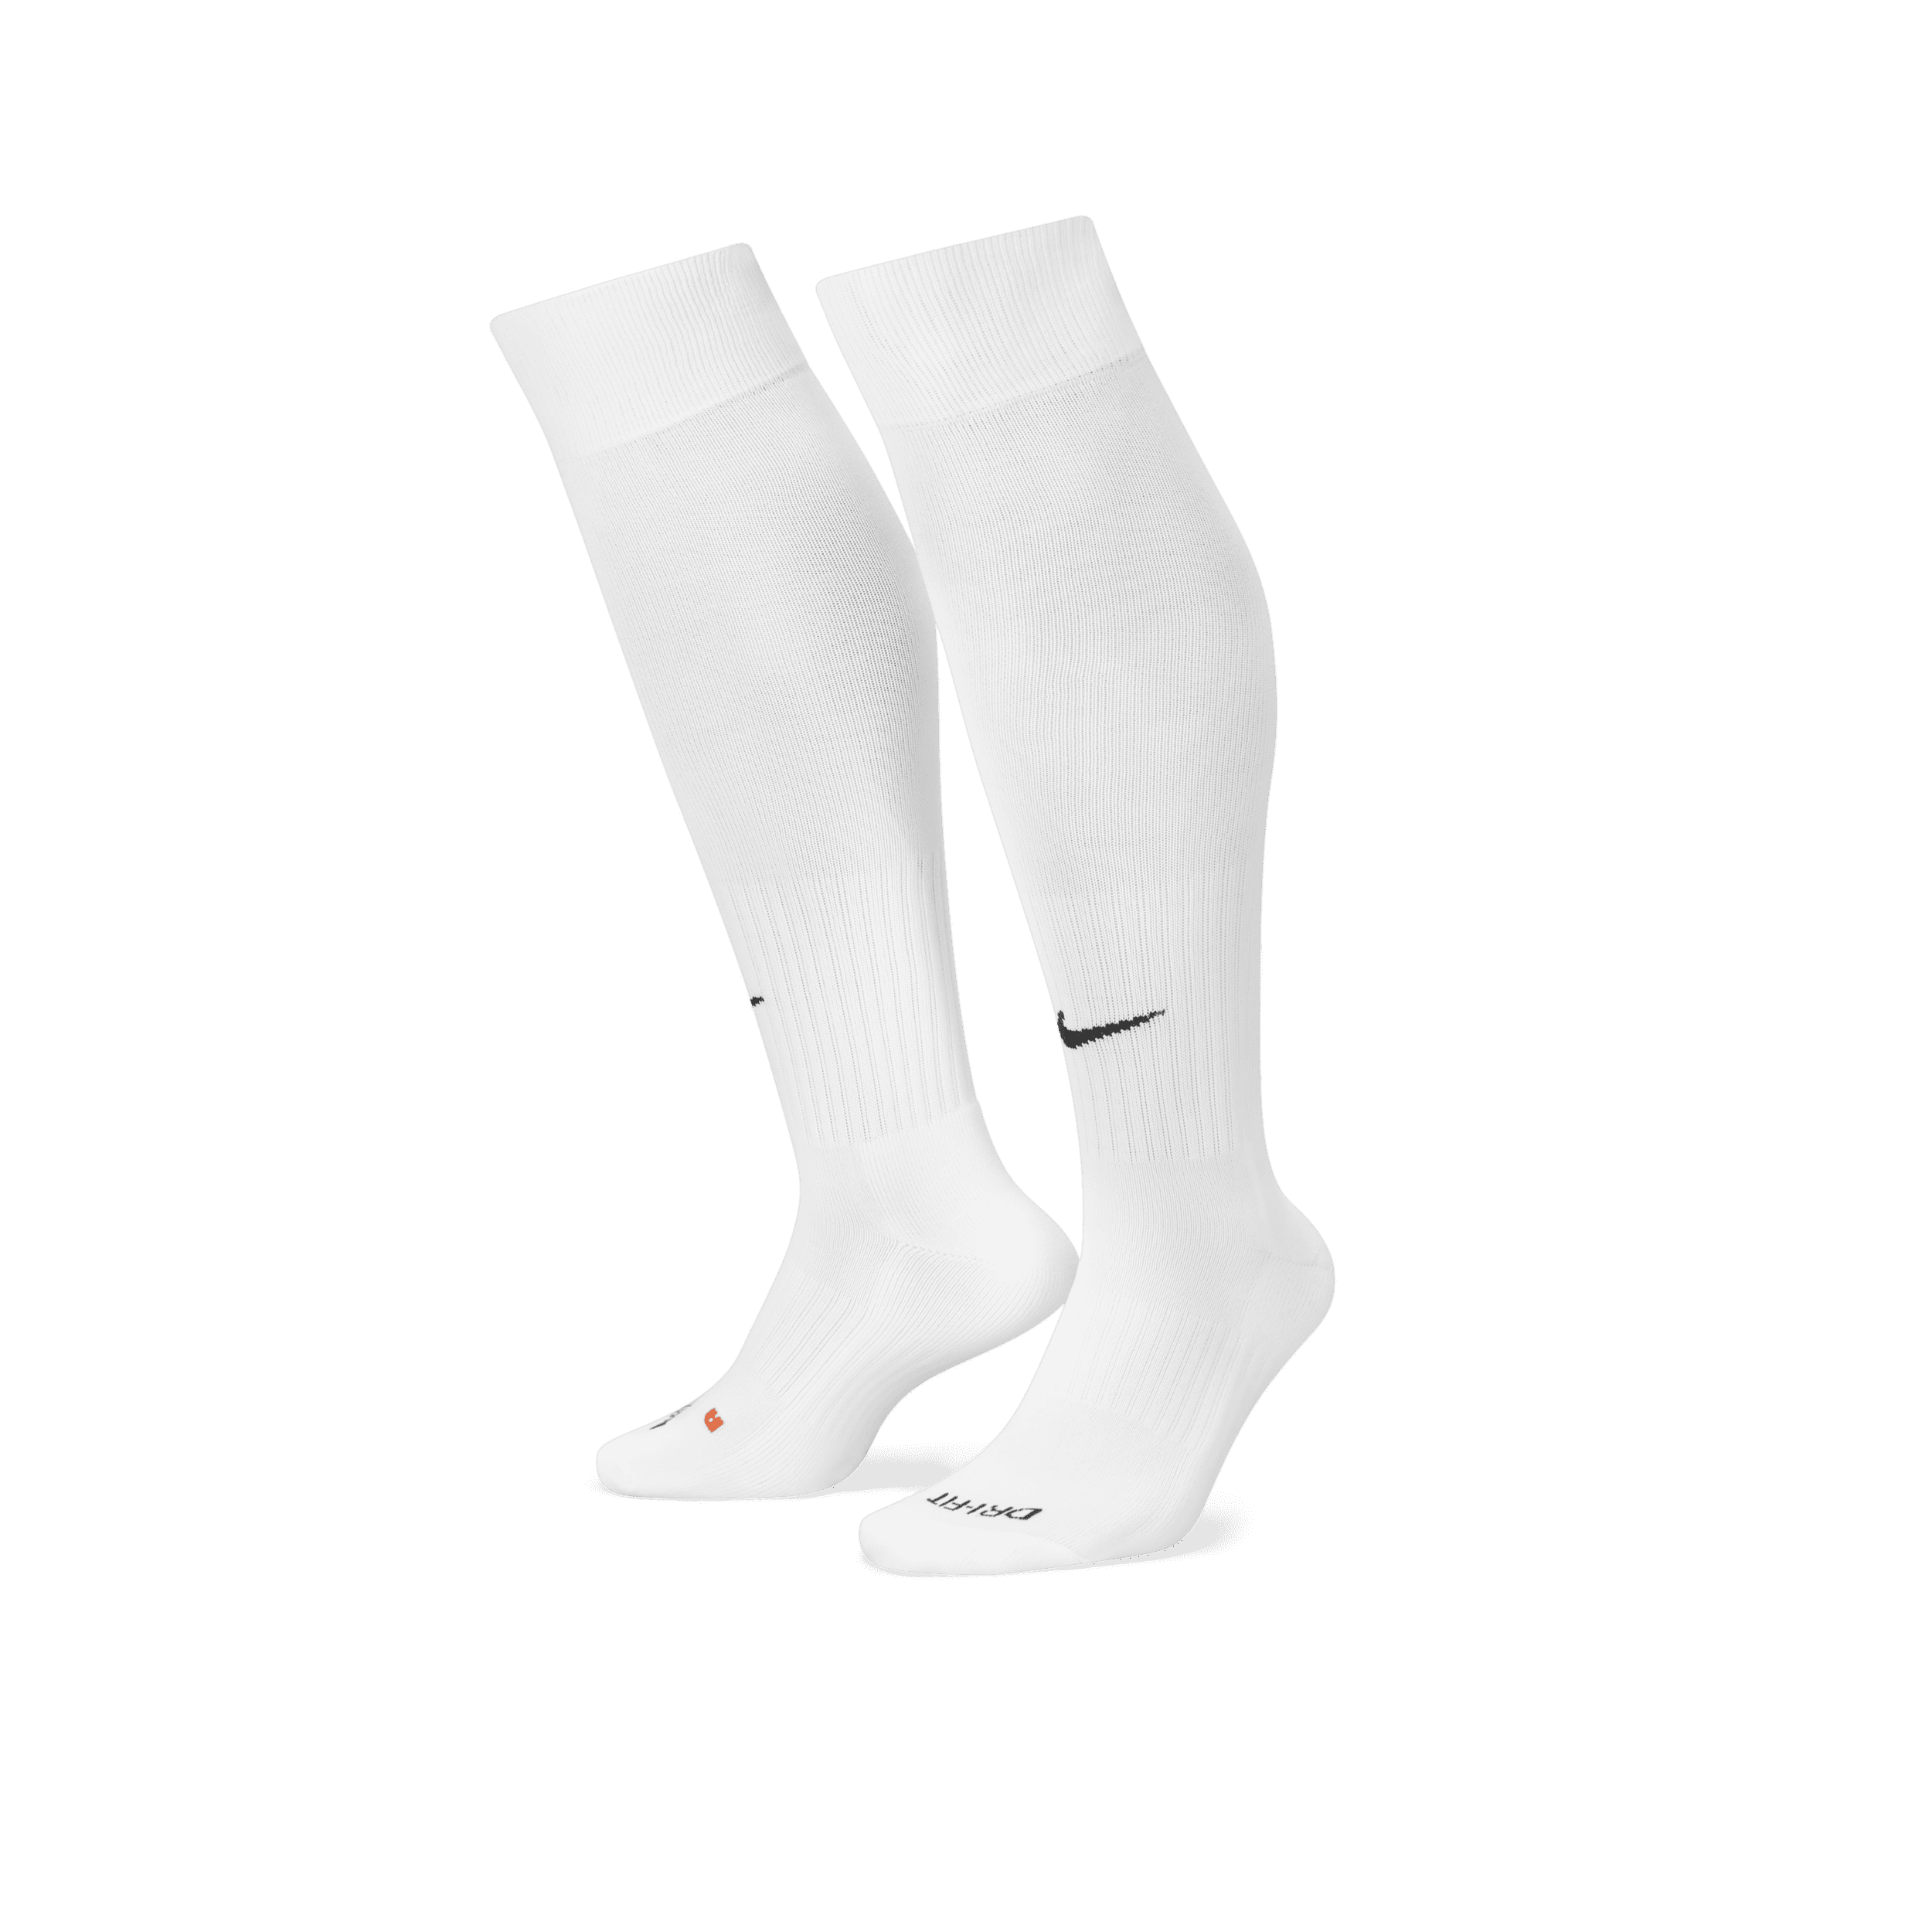 Calzettoni ammortizzati Nike Classic 2 - Bianco